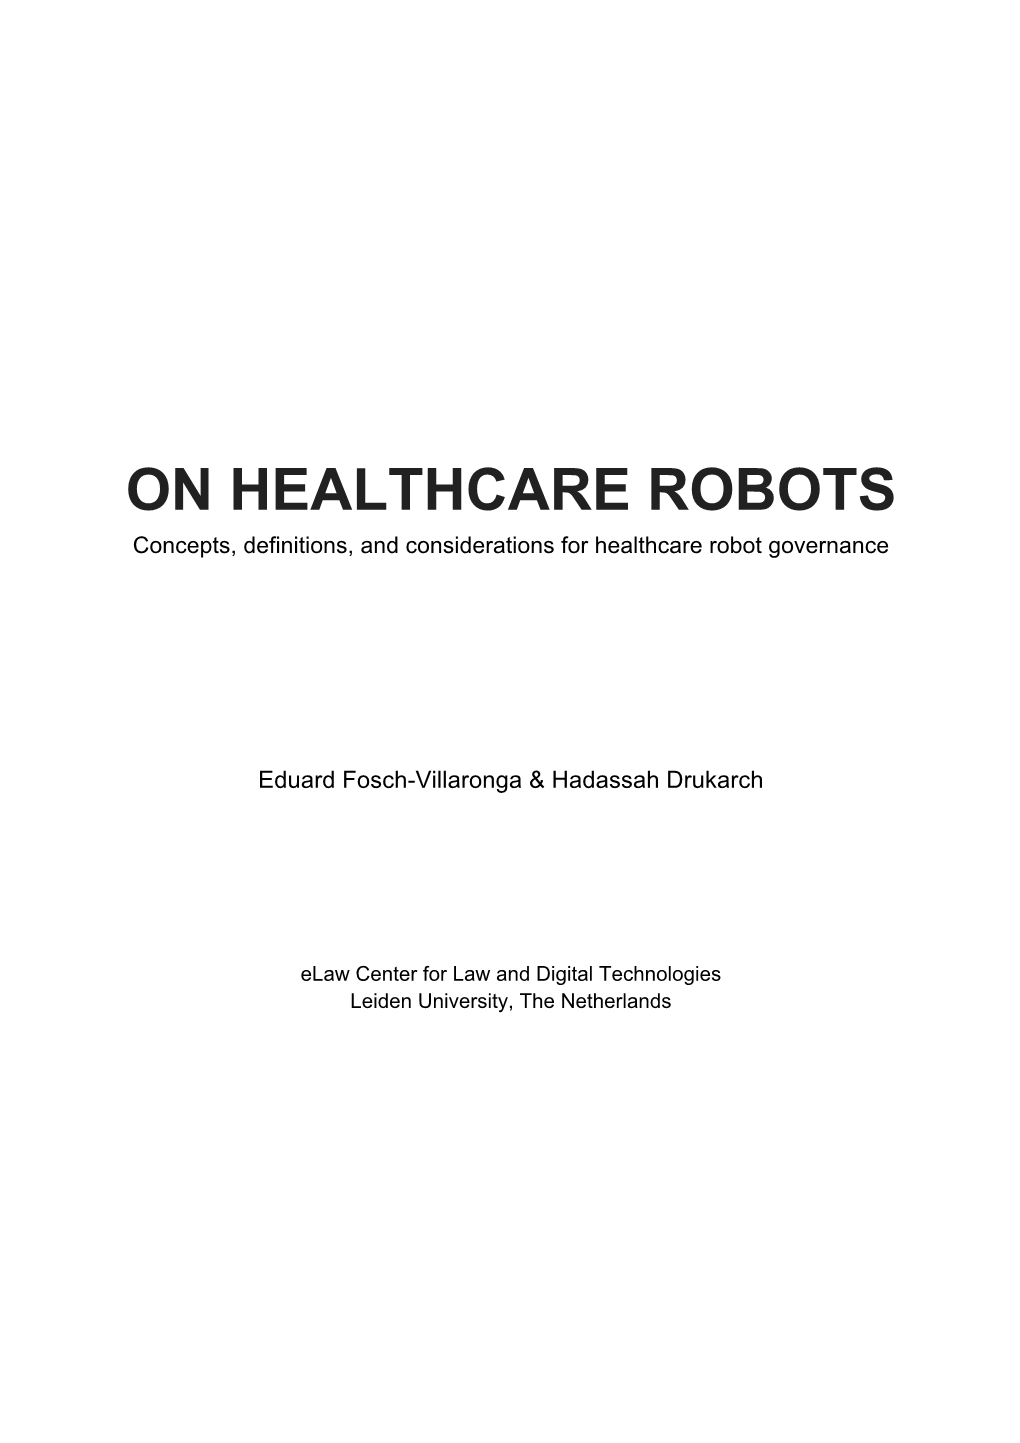 On Healthcare Robots